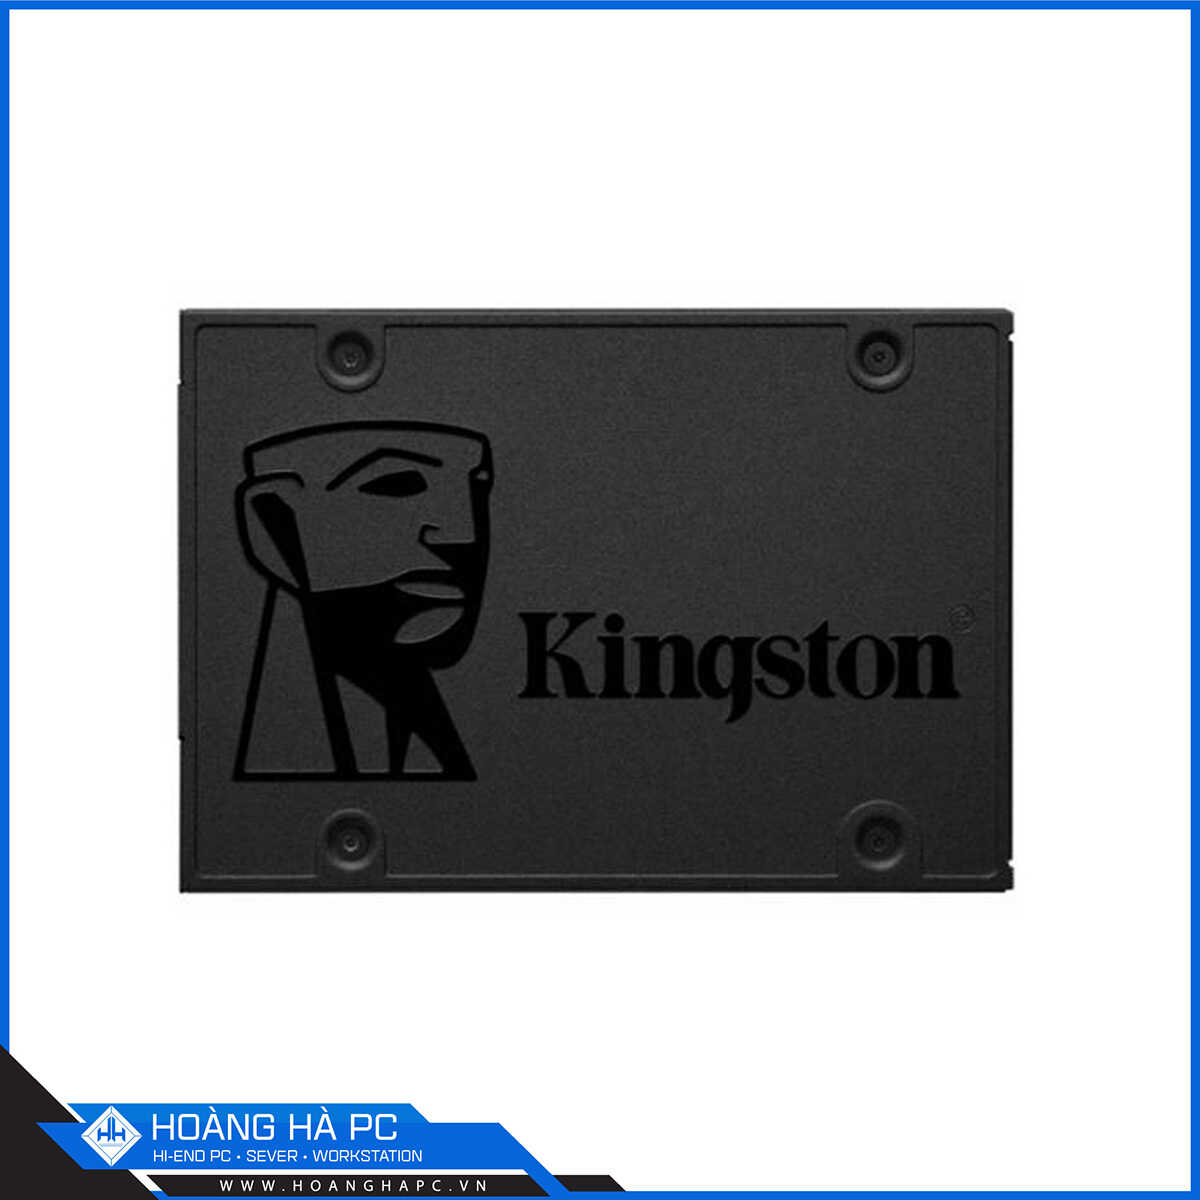 SSD Kingston A400 120GB